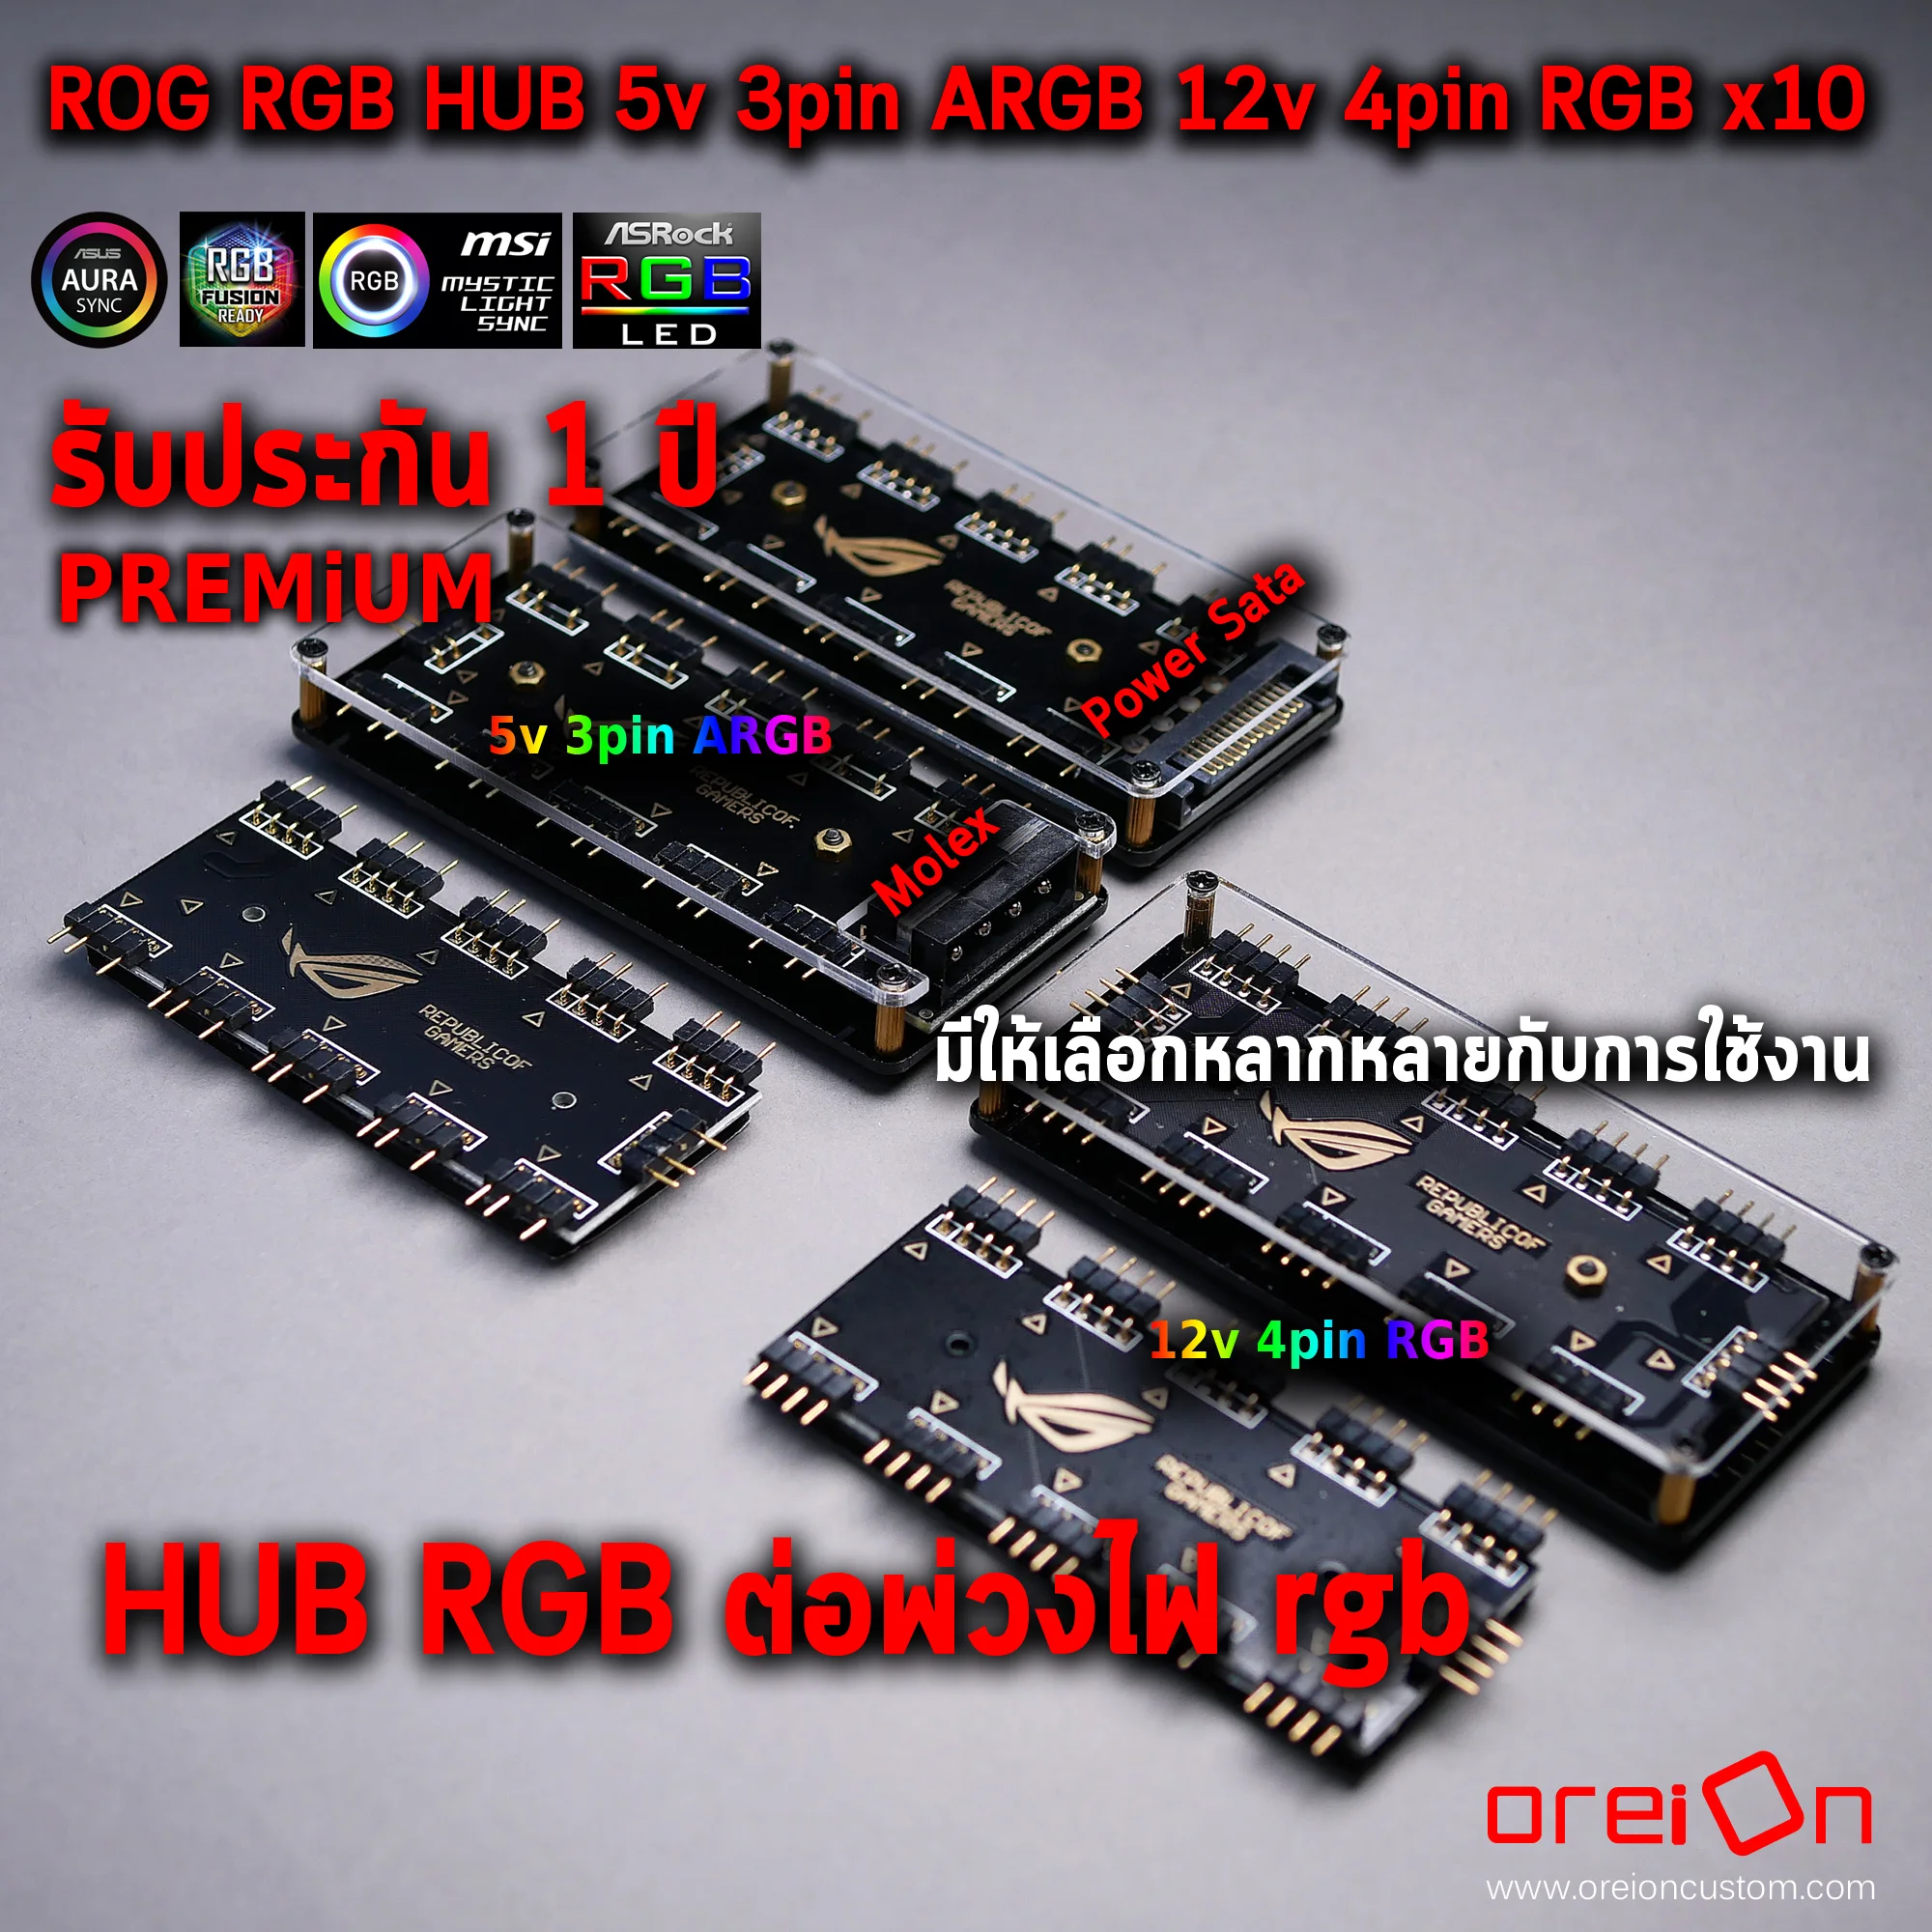 Splitter HUB RGB Hub ROG 3pin5v 4pin12v ARGBRGB LED x10 With Cover (1)